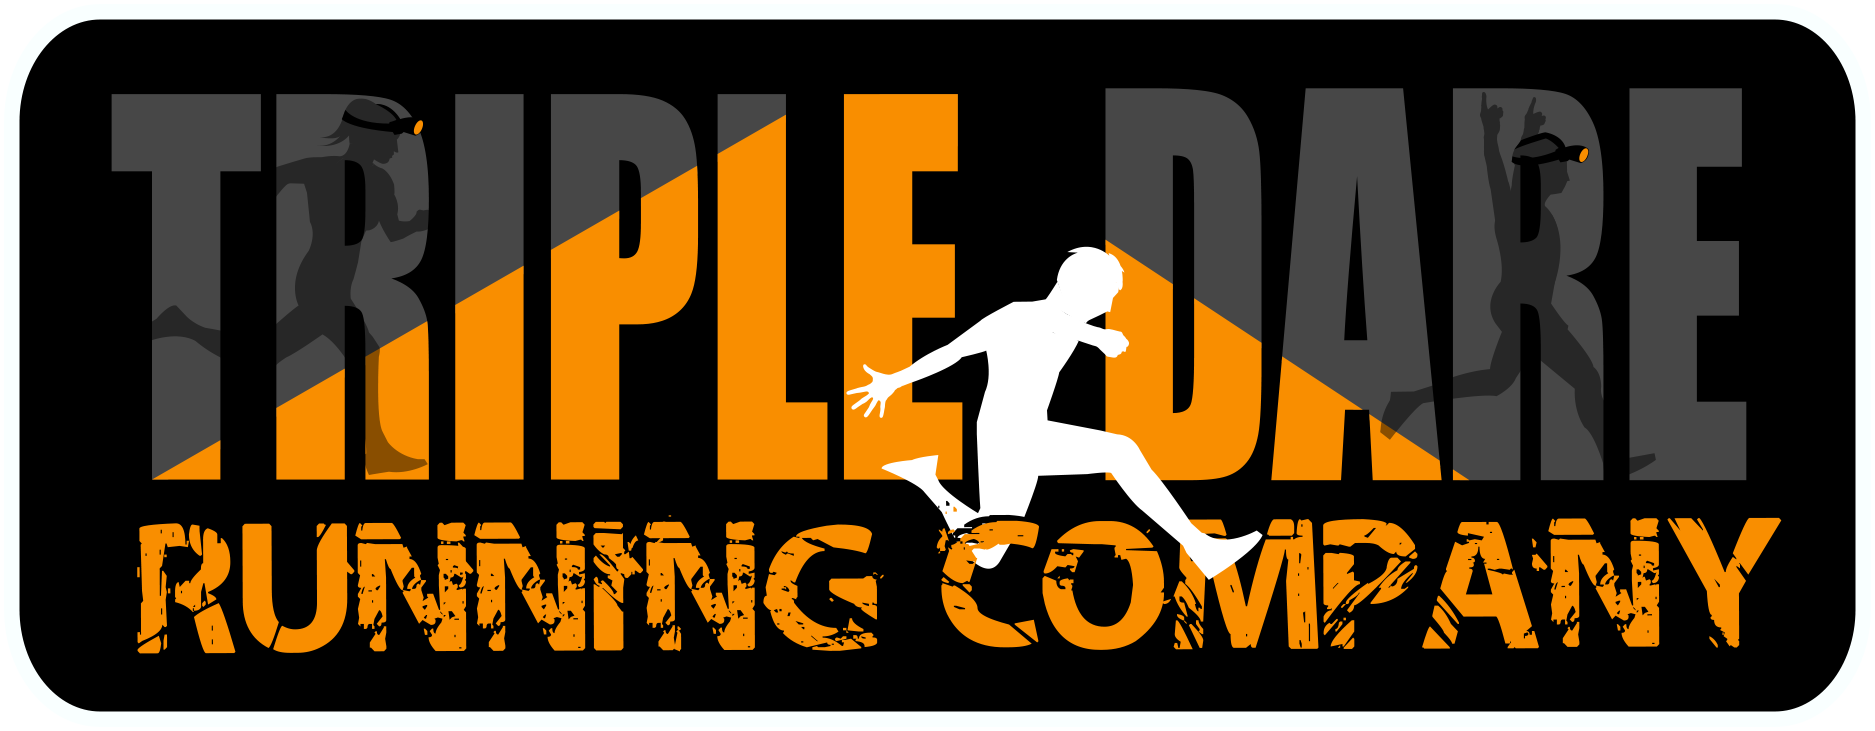 Triple Dare Main Logo2